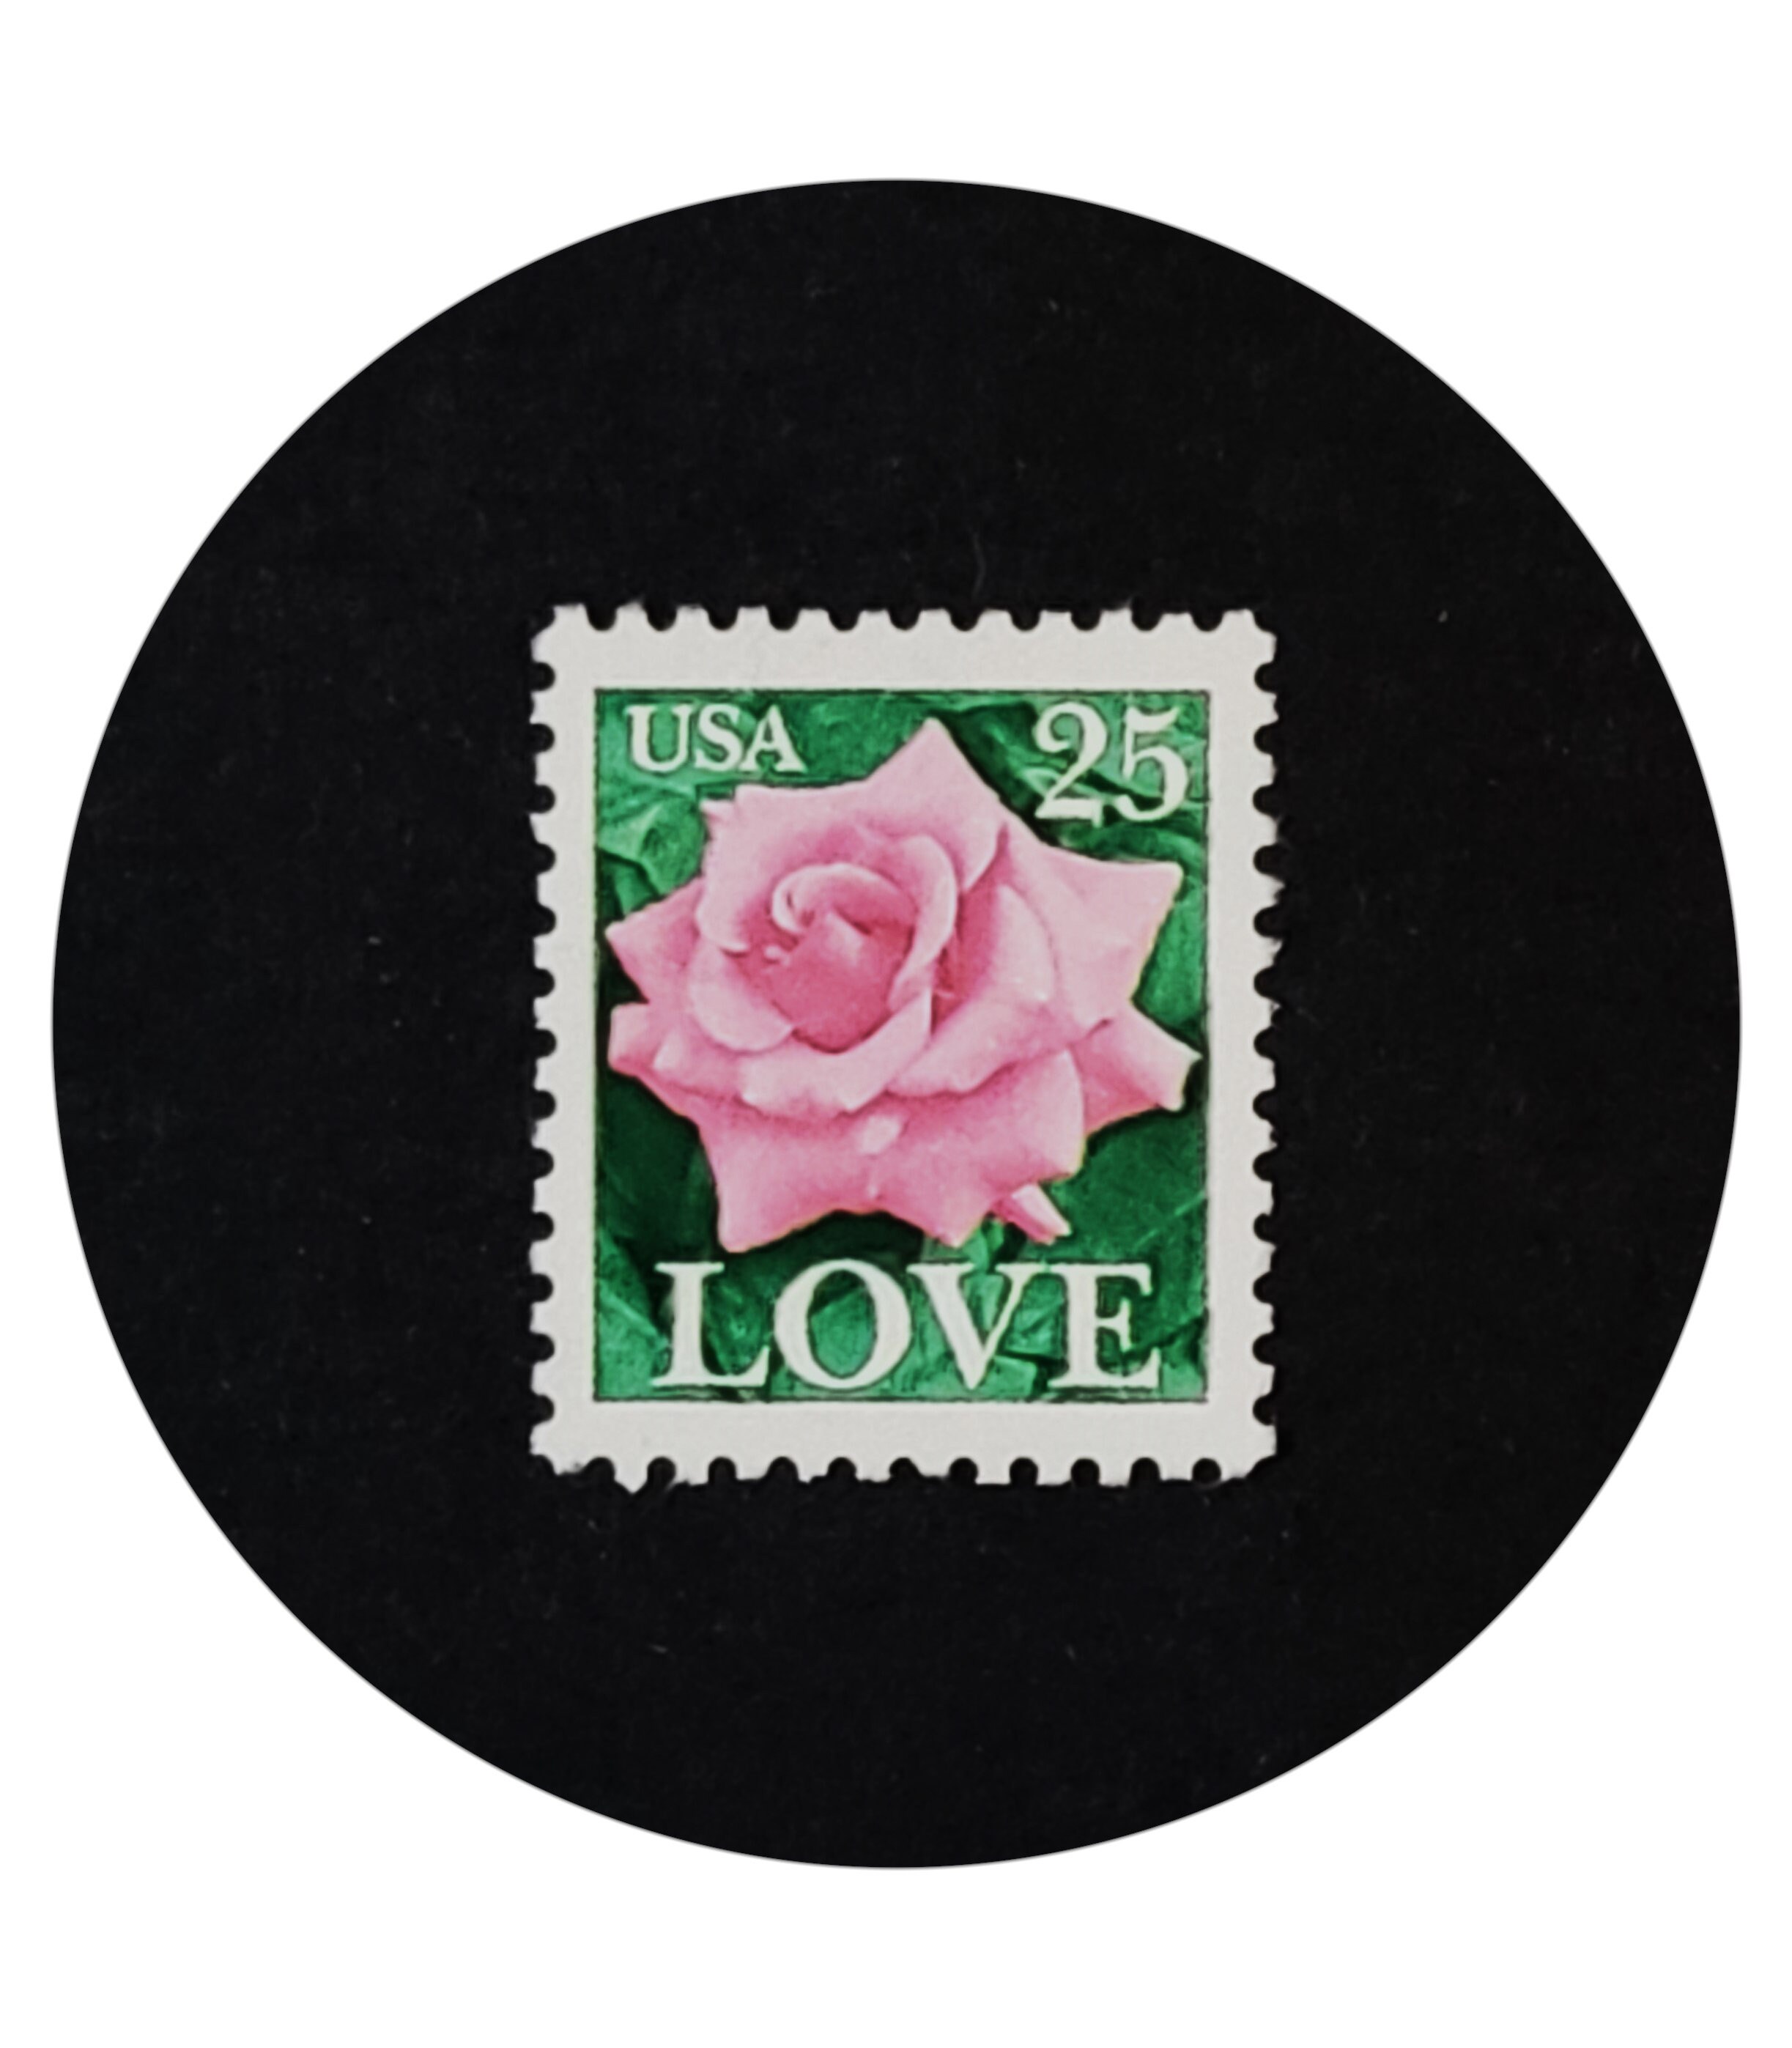 LOVE Stamp Set of 50 .. Unused Vintage Postage Stamps .. 25 cent PINK ROSE.  Floral Love stamp for mailings and wedding invitations. Brides